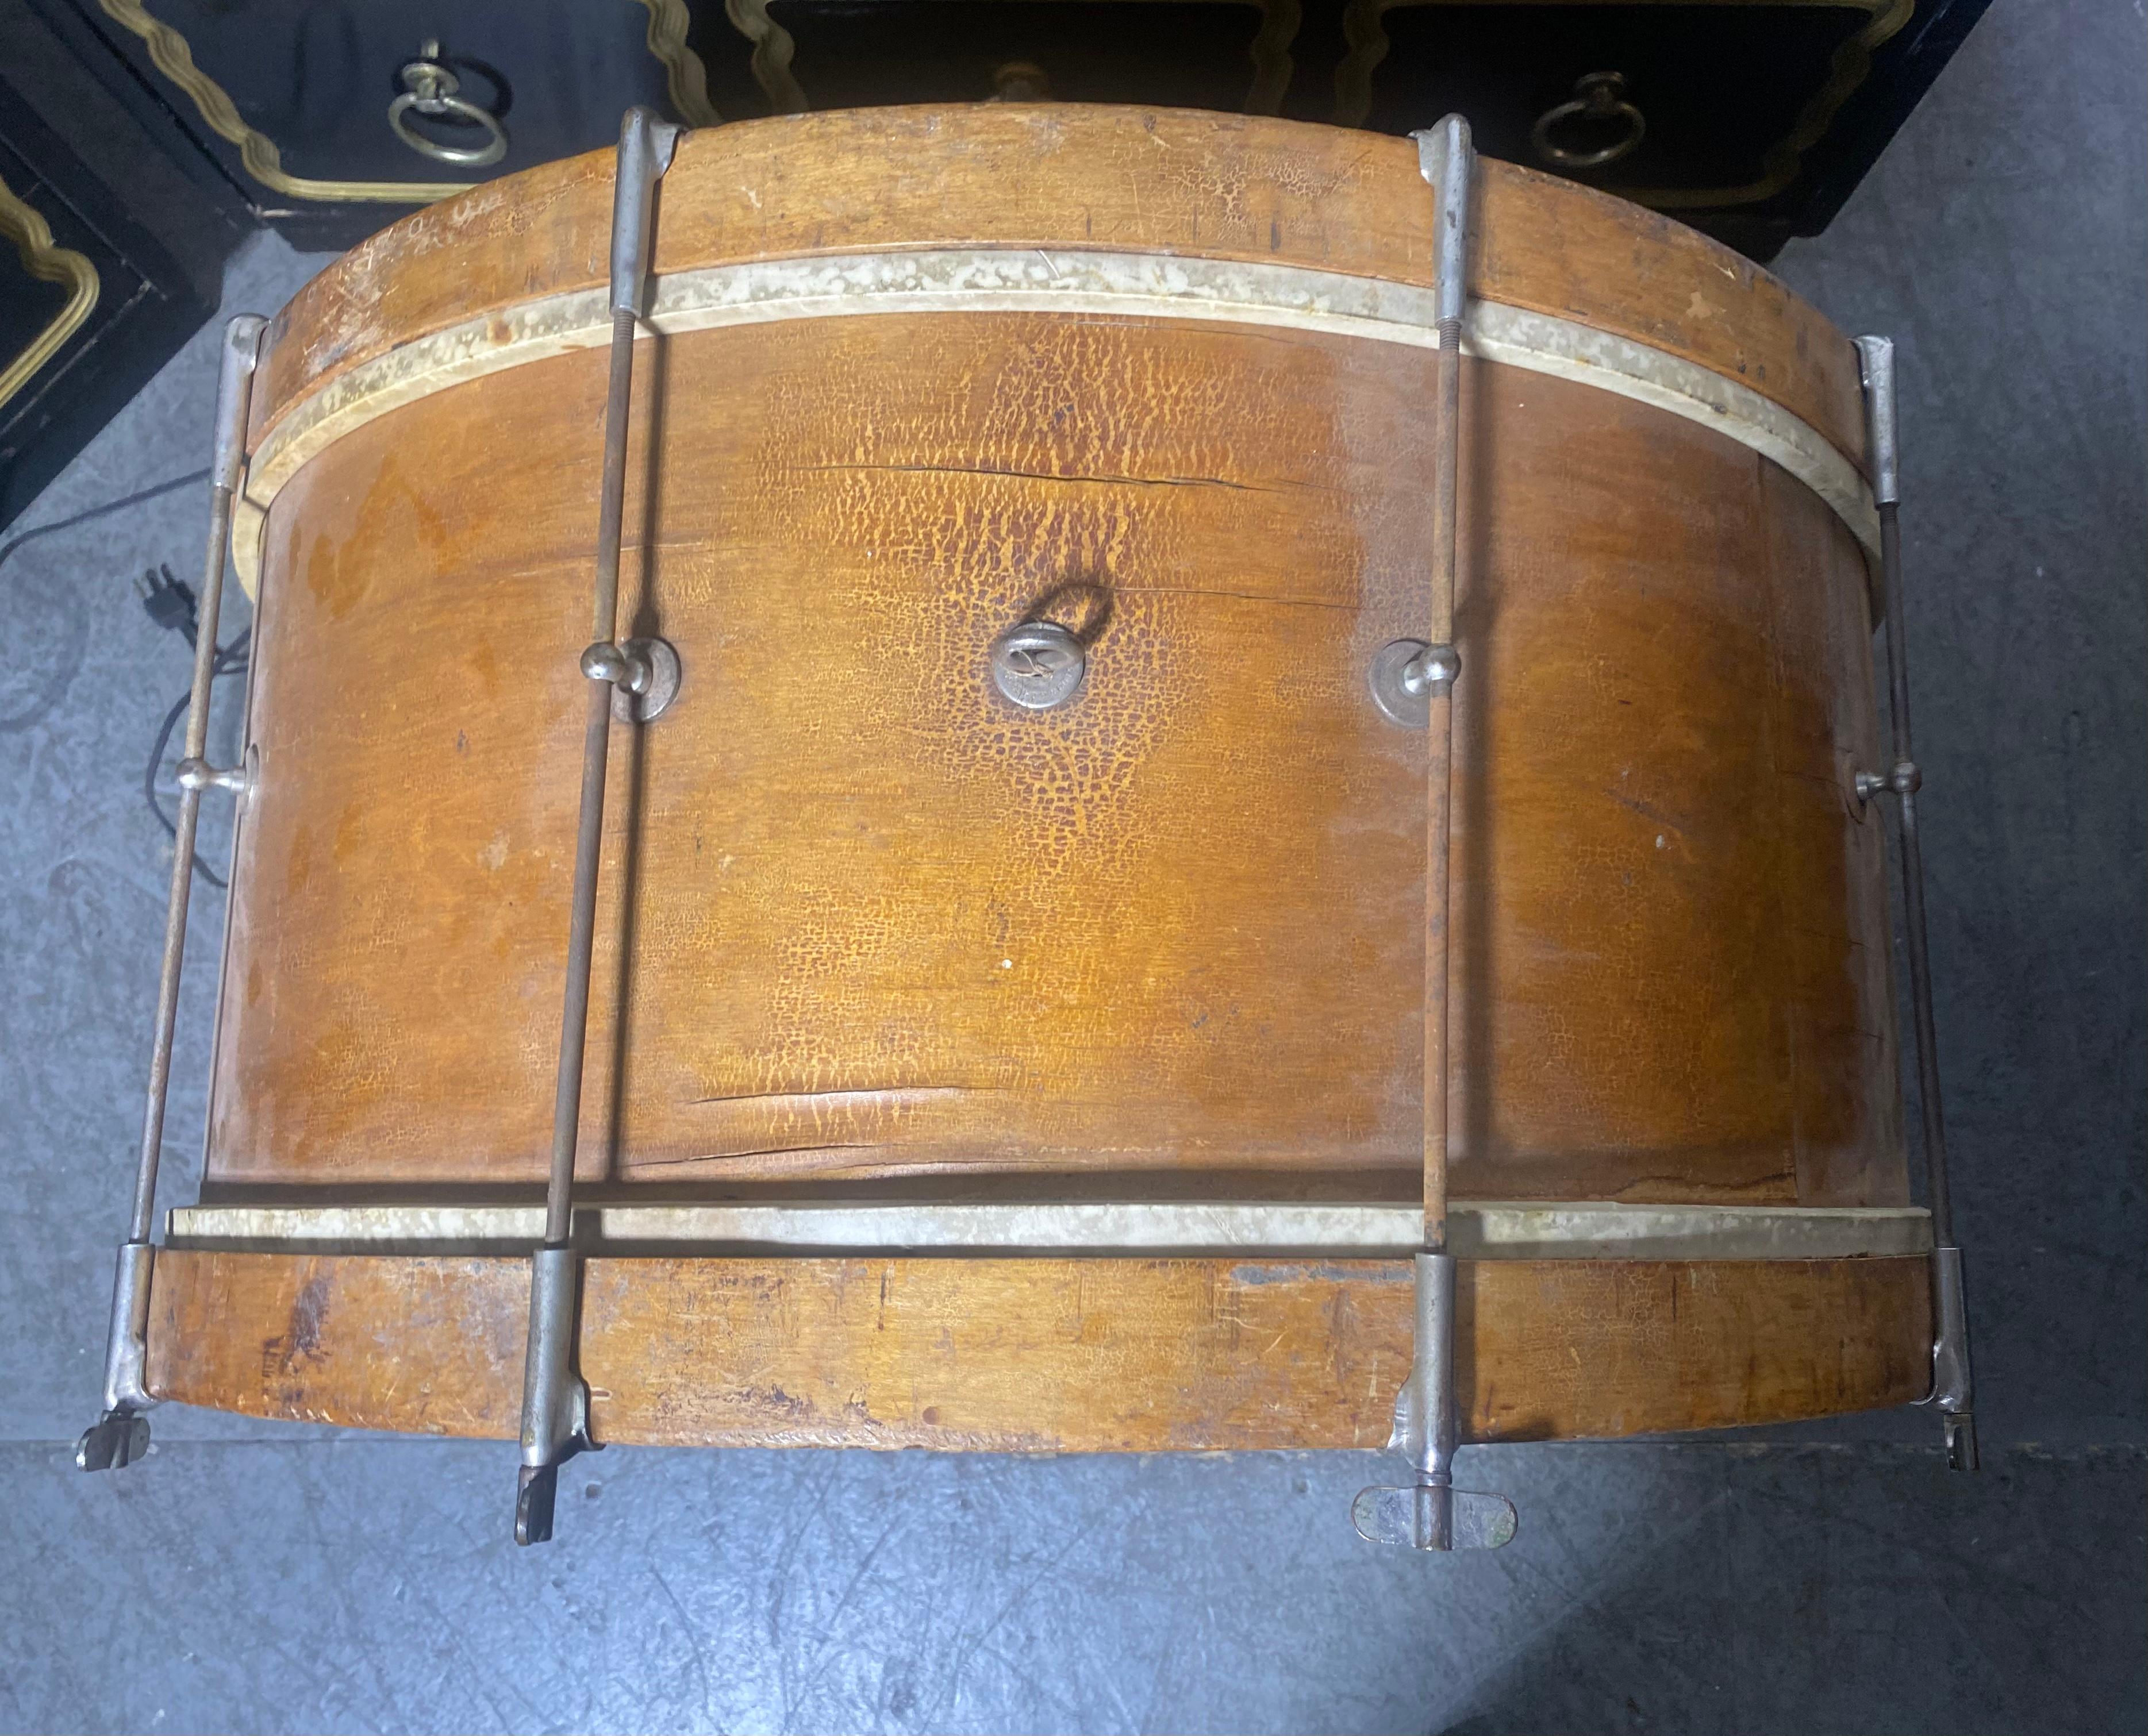 1920s drum kit